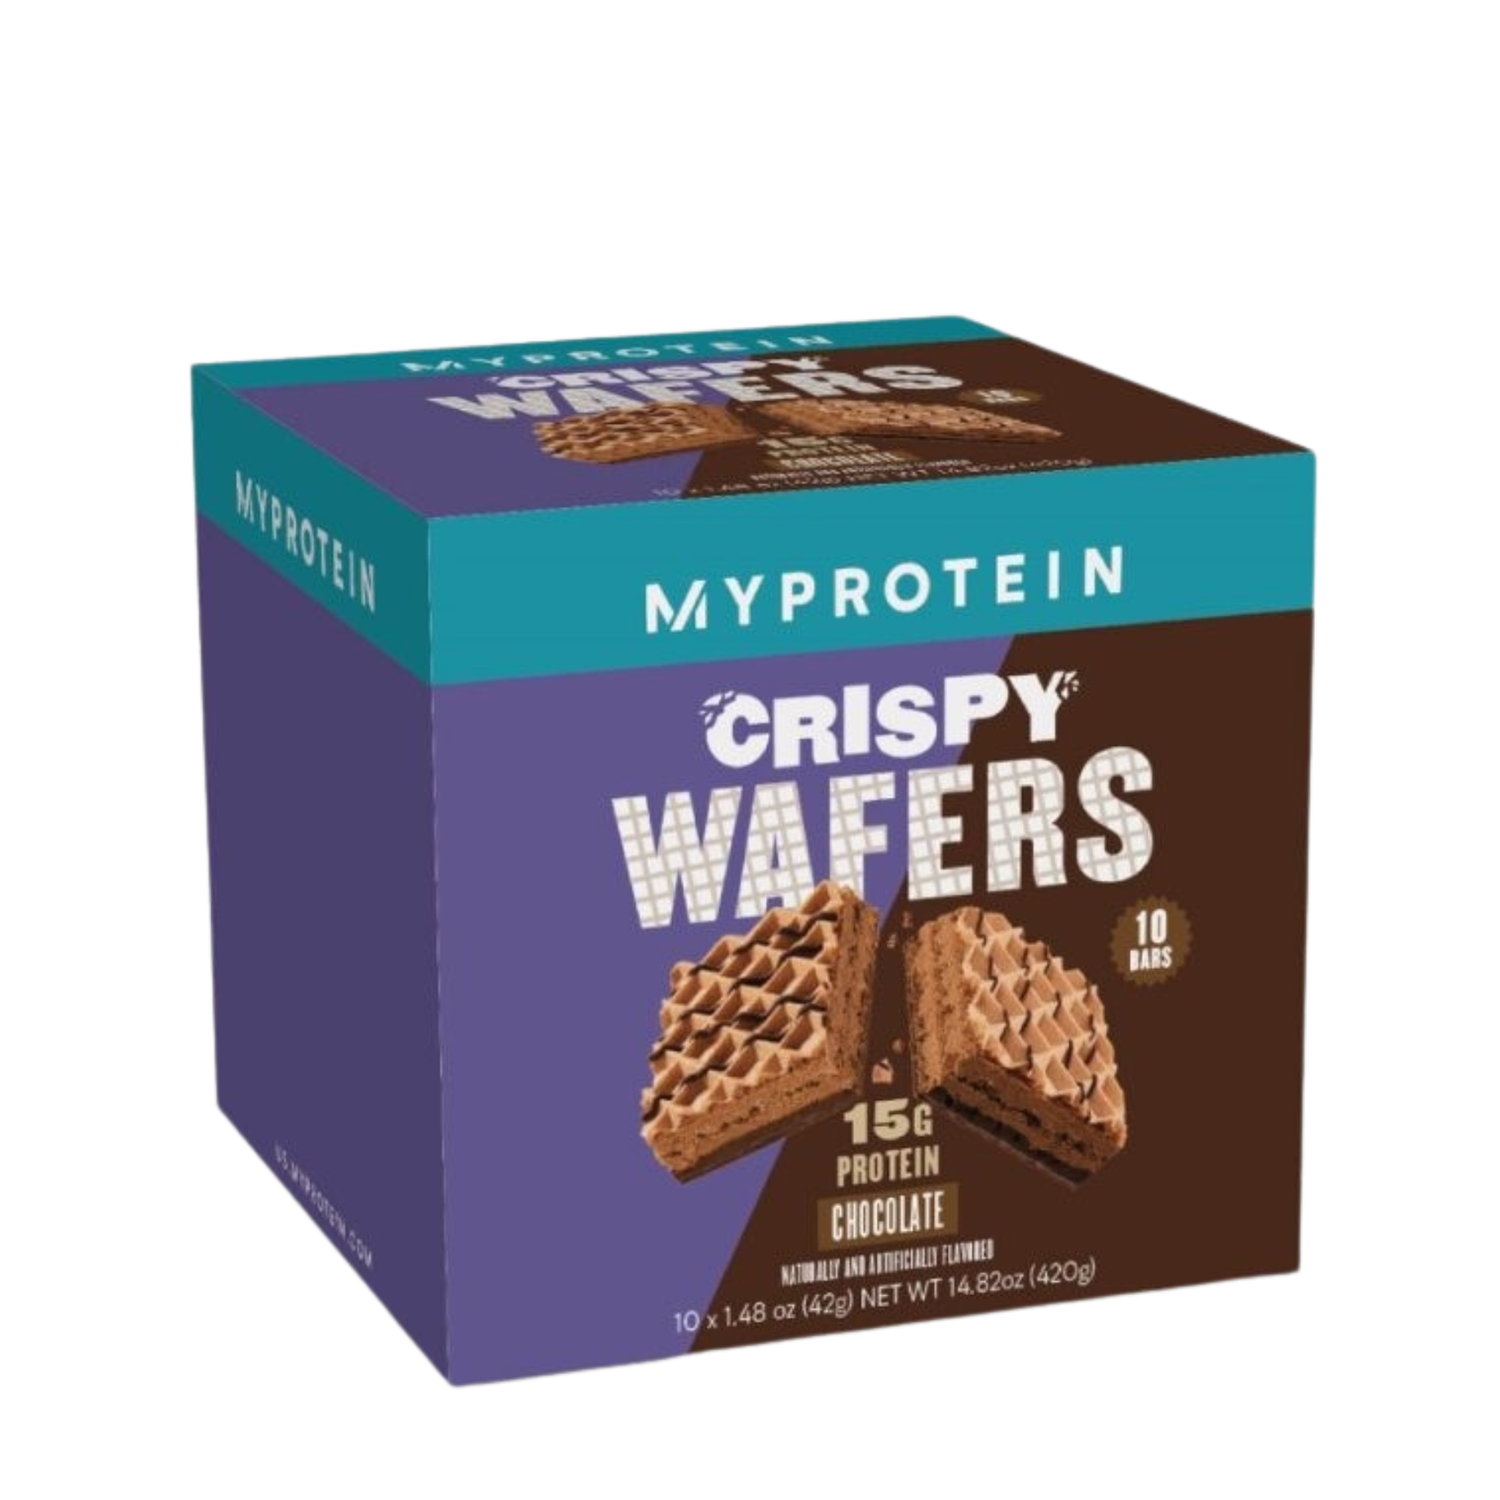 Myprotein Crispy Wafers Healthy